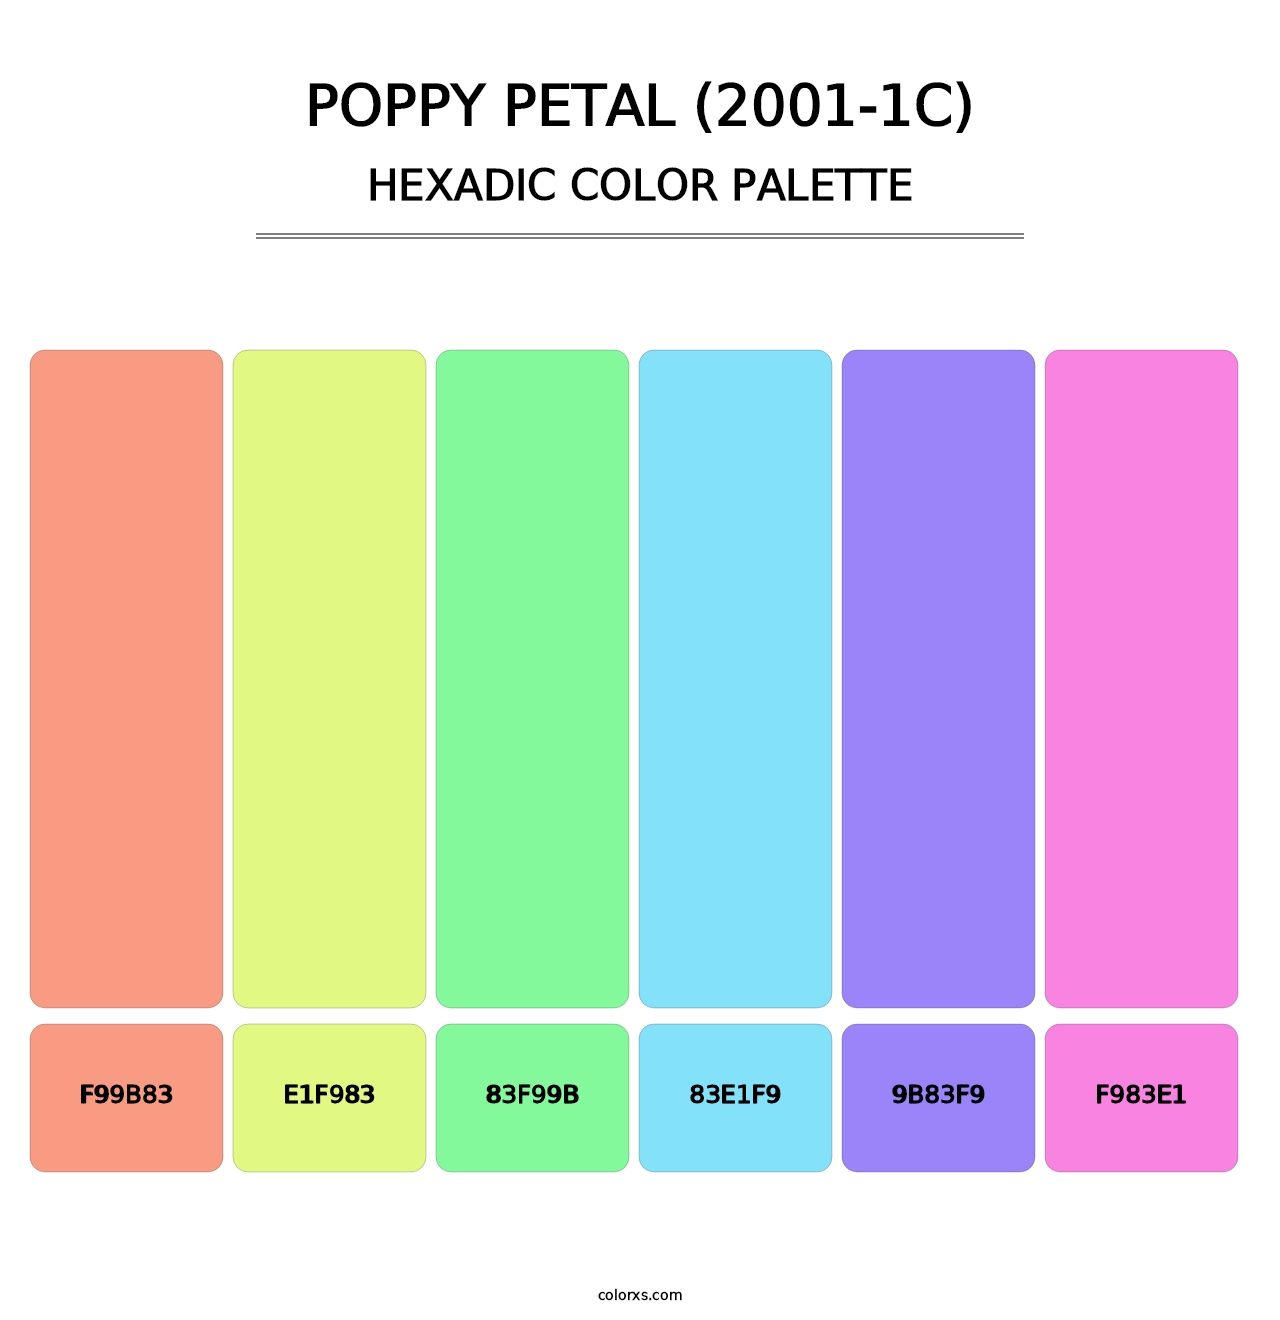 Poppy Petal (2001-1C) - Hexadic Color Palette